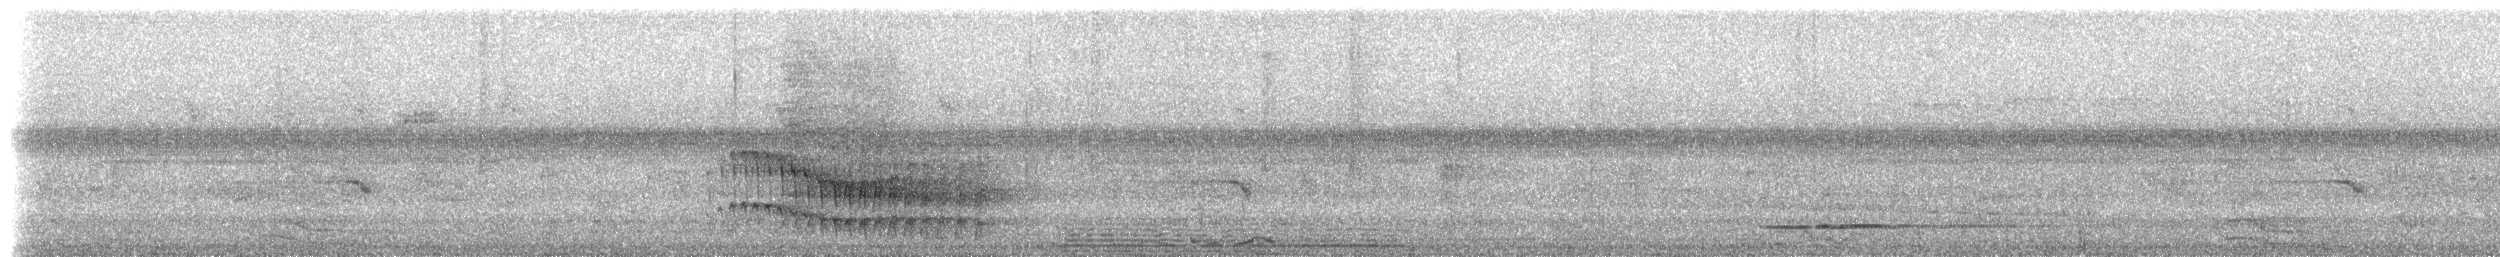 Anabate de Sclater (cervinigularis) - ML151013541